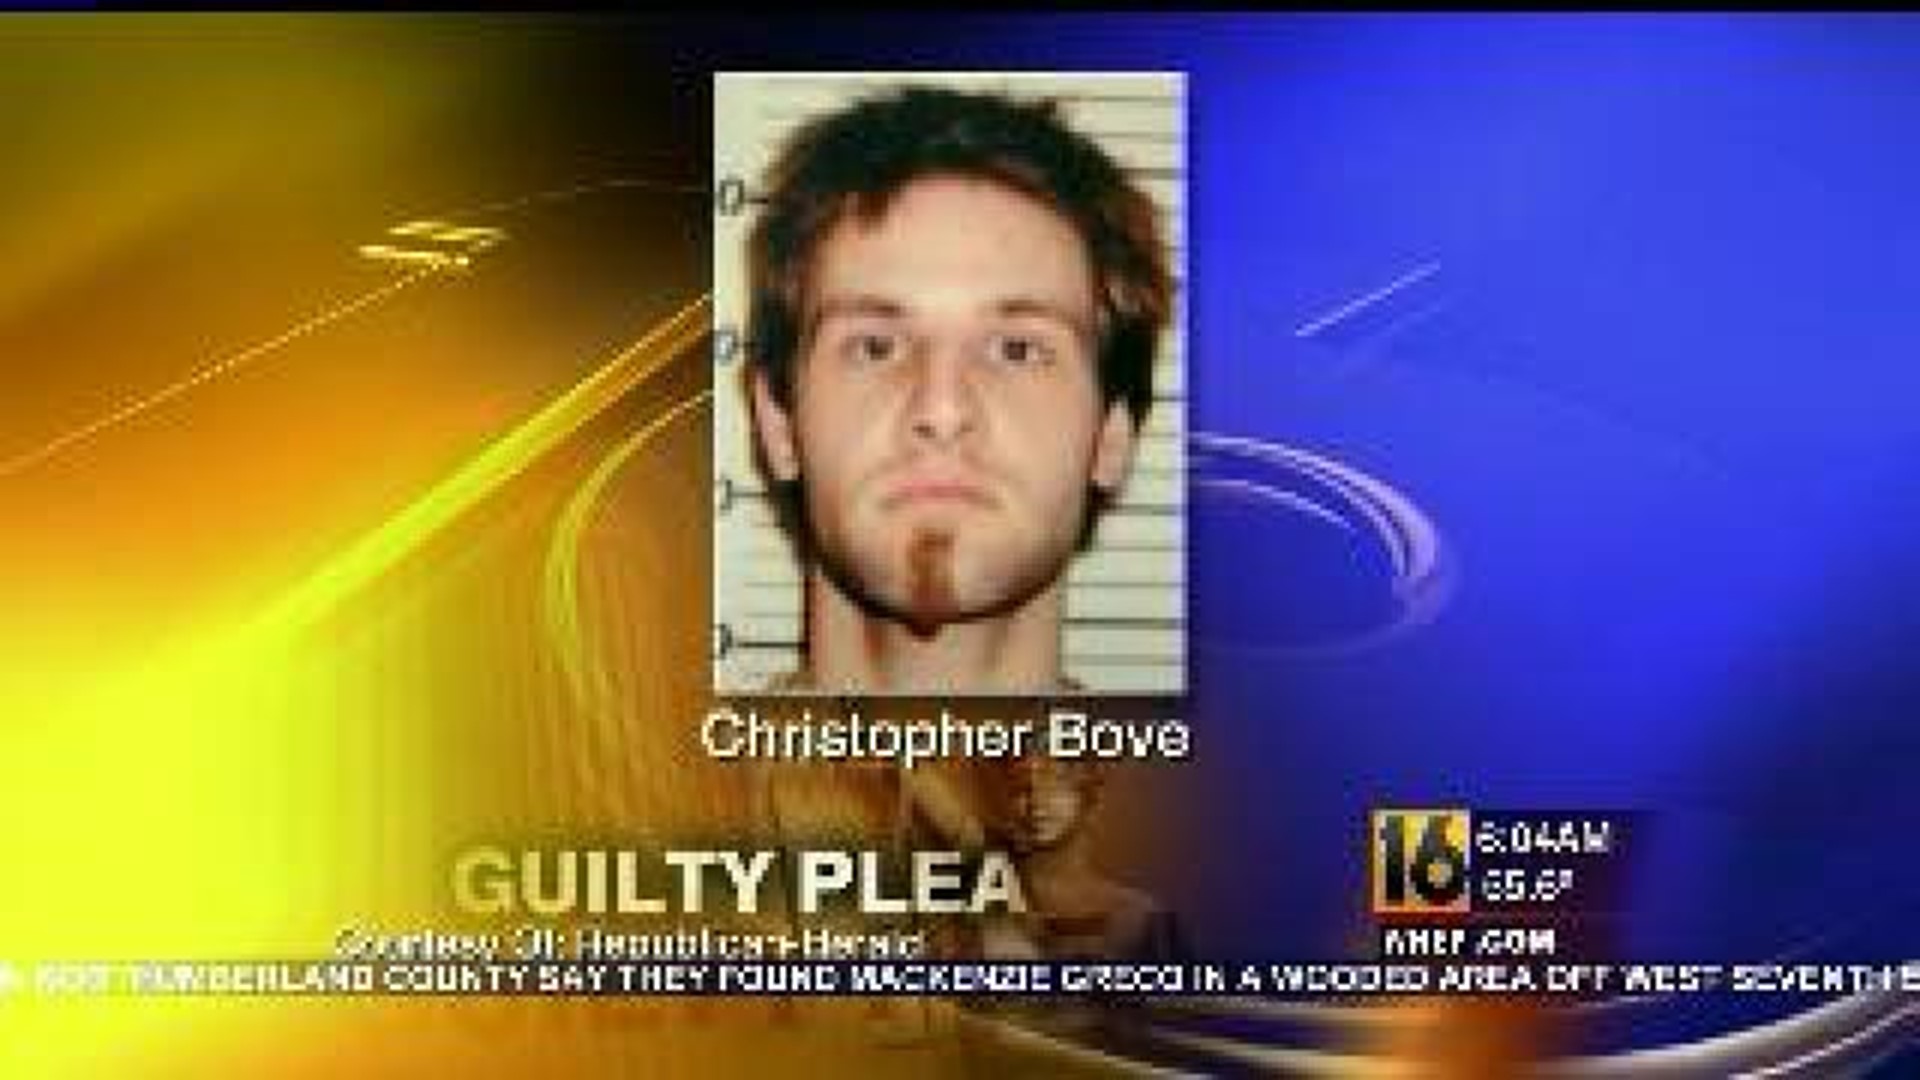 Man Pleads, Sentenced for Child Sex Crime